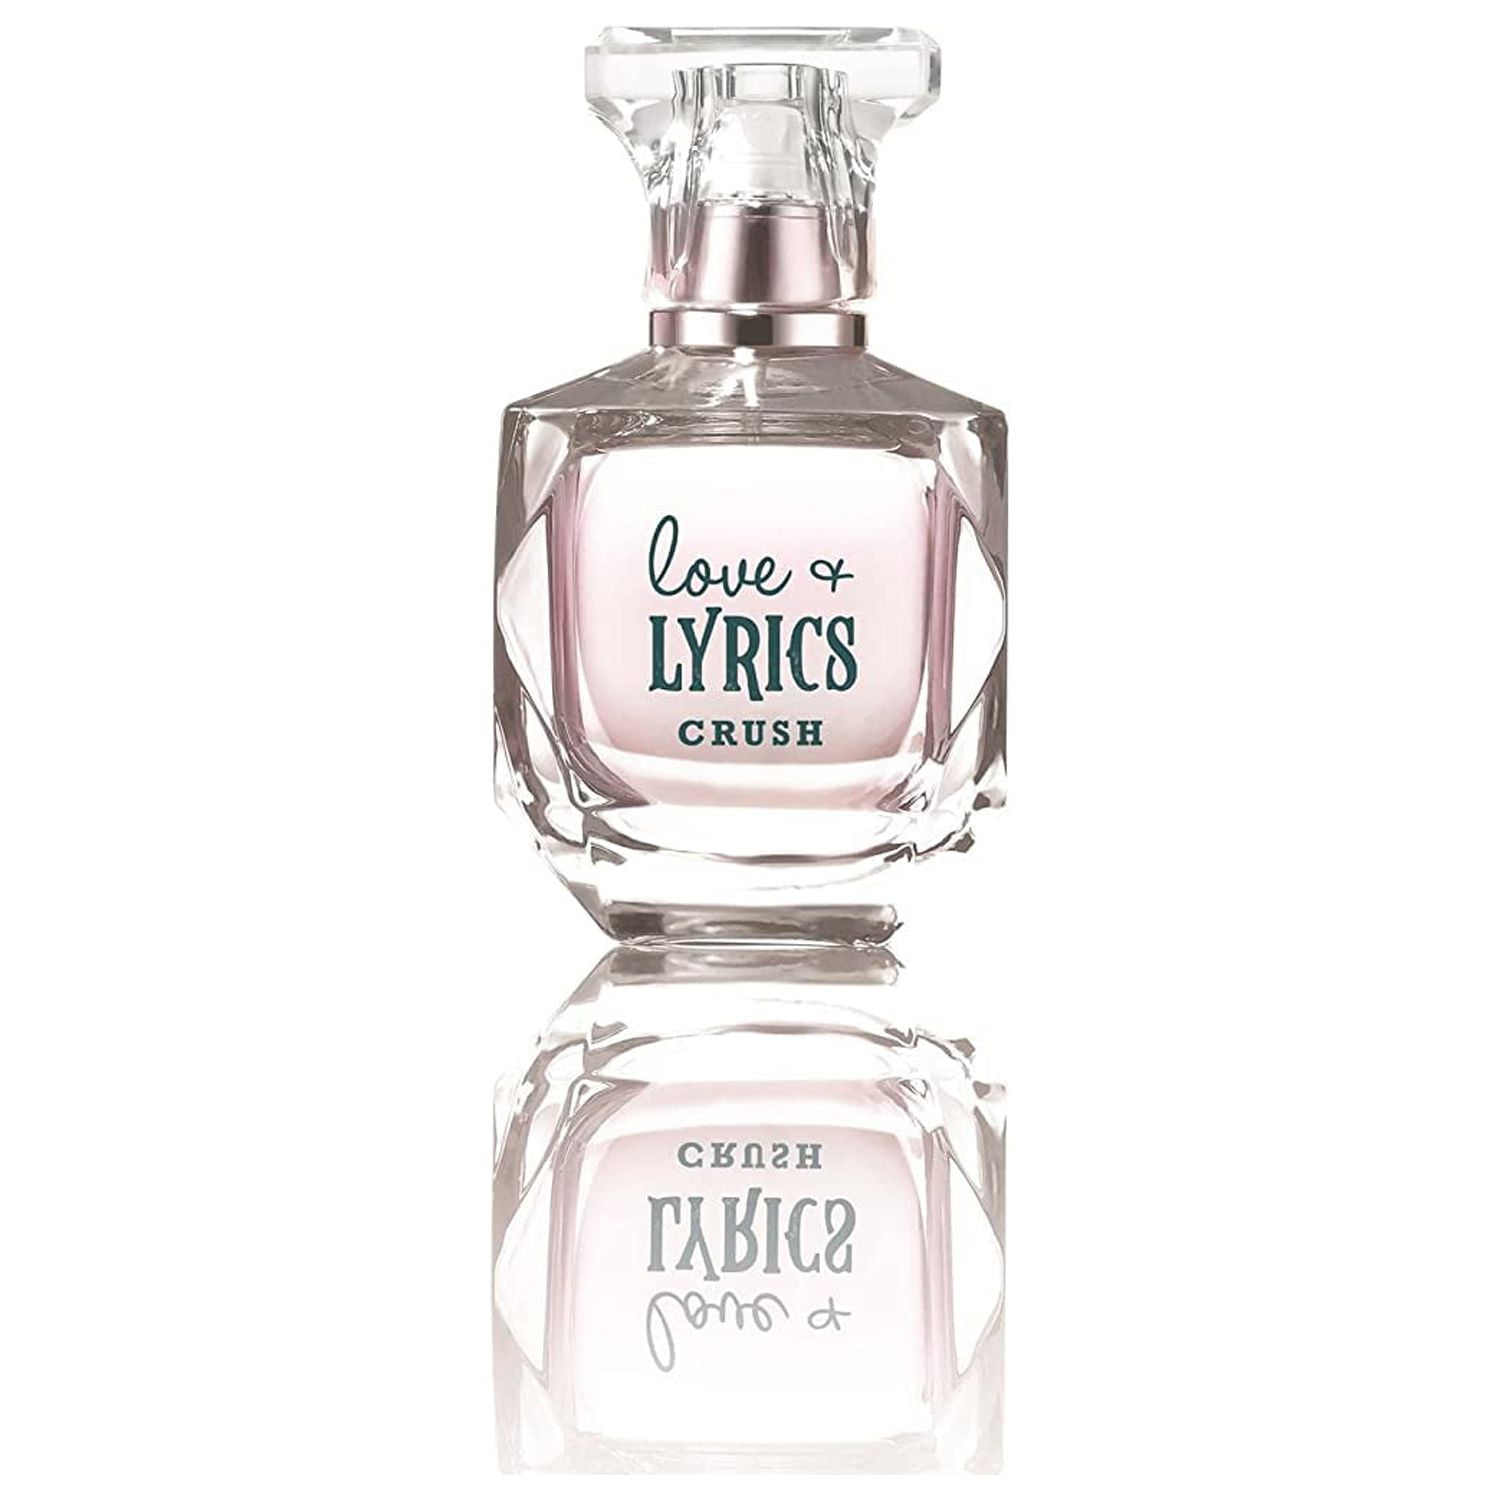 Tru Western Love & Lyrics Crush Women's Perfume, 1.7 fl oz (50 ml) - Fruity  Floral, Creamy Musk